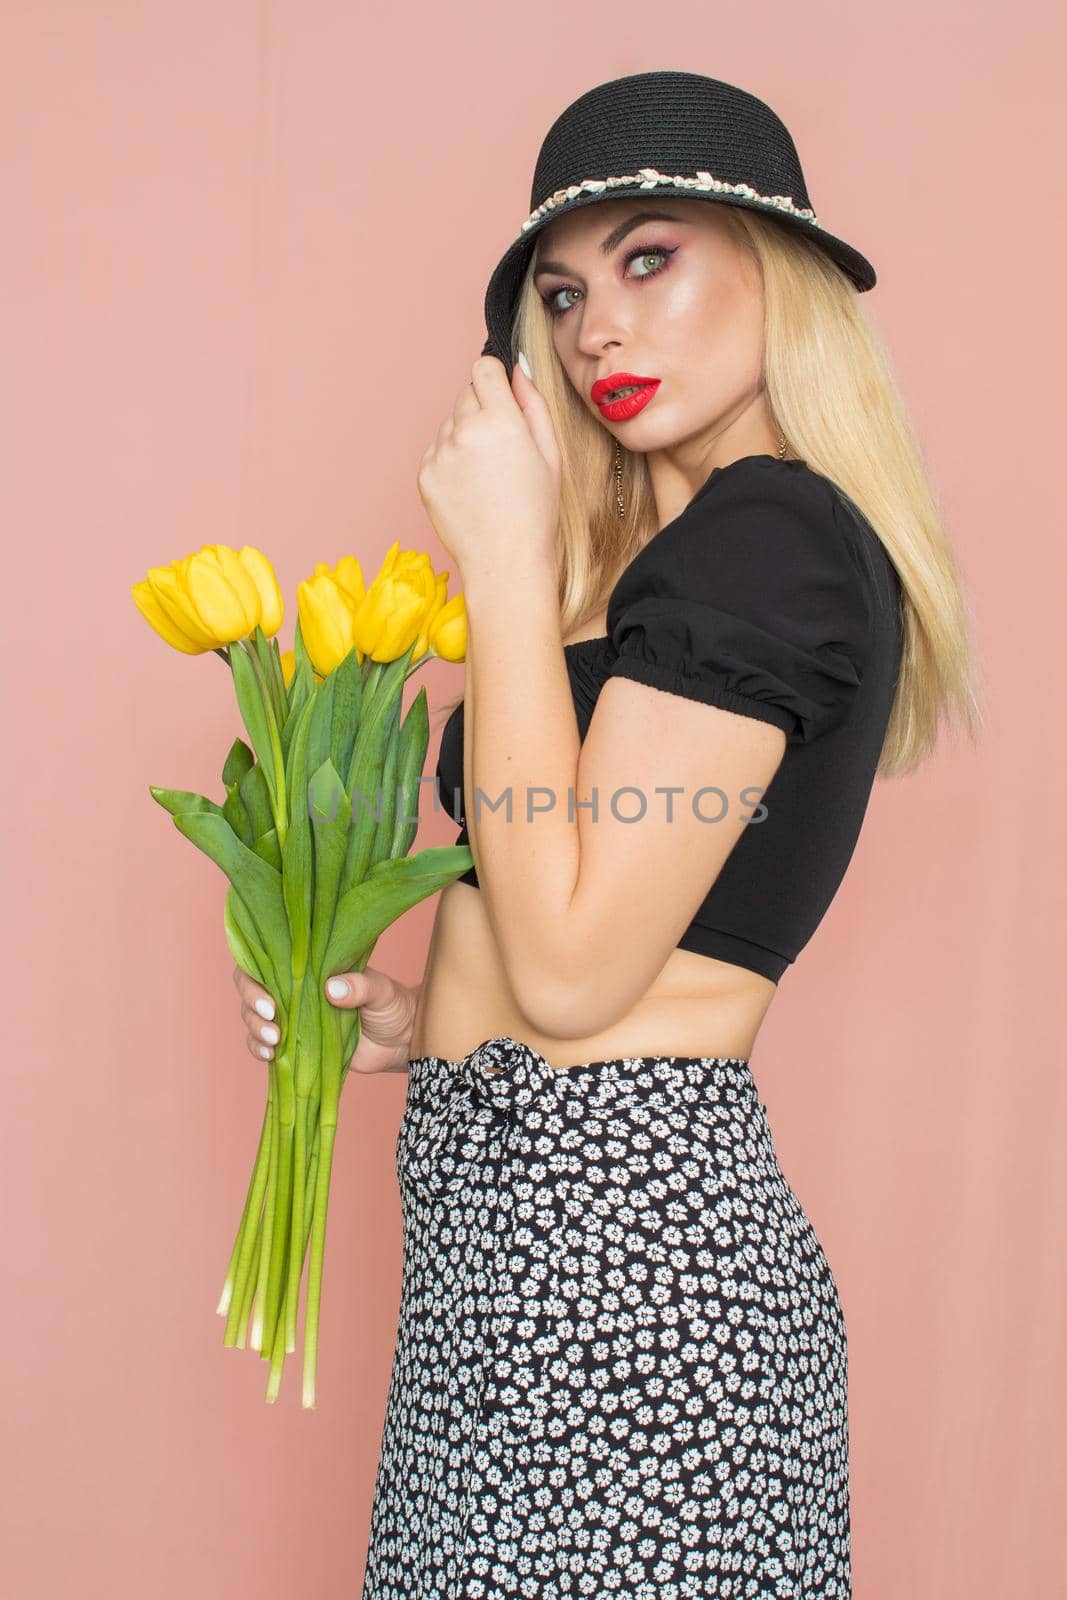 Blonde woman in black hat holding yellow tulips by Bonda